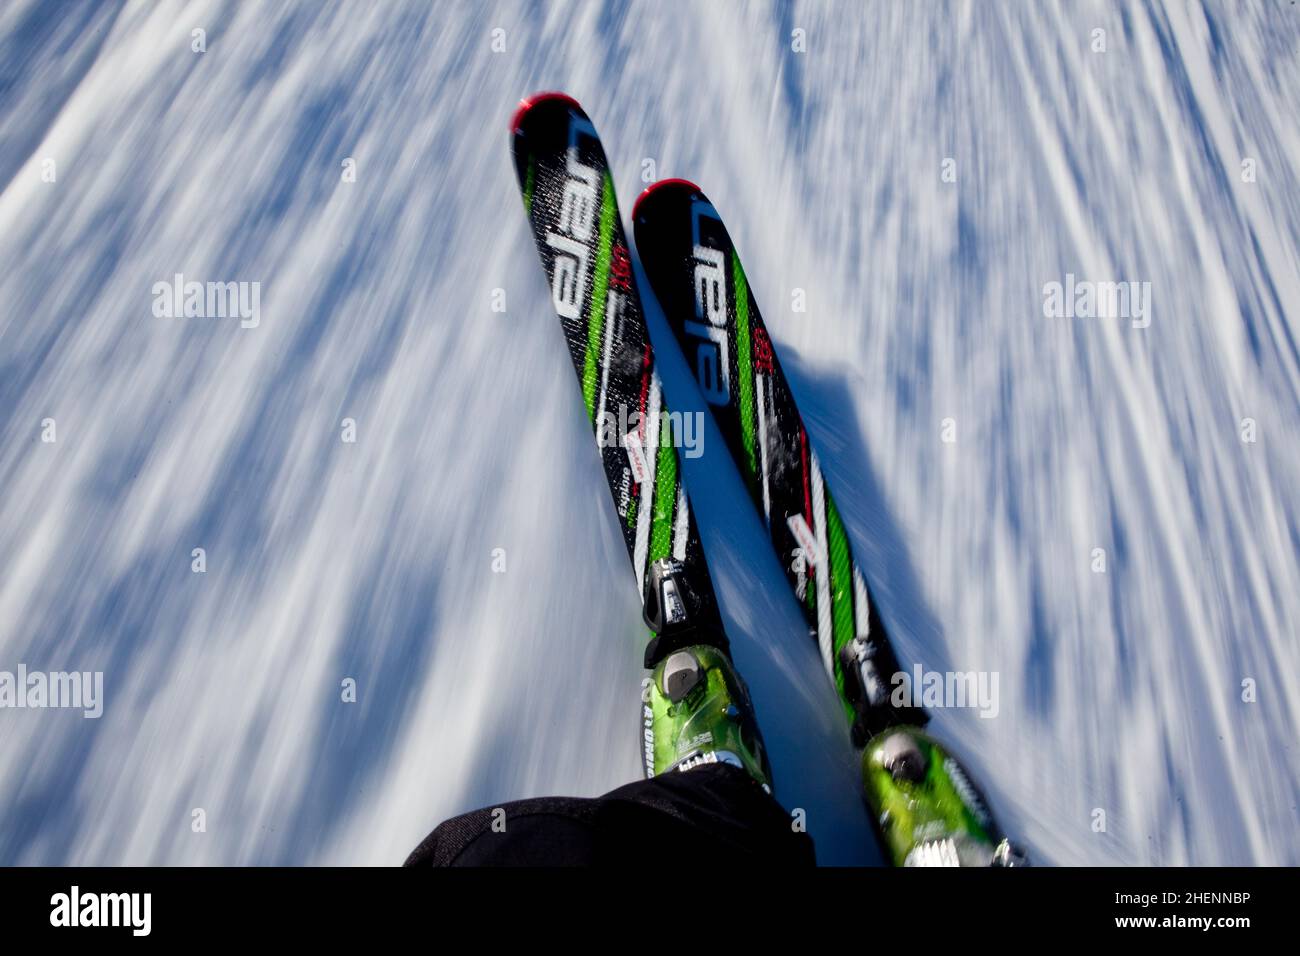 Motion blur of Alpine skis on a downhill run. Stock Photo